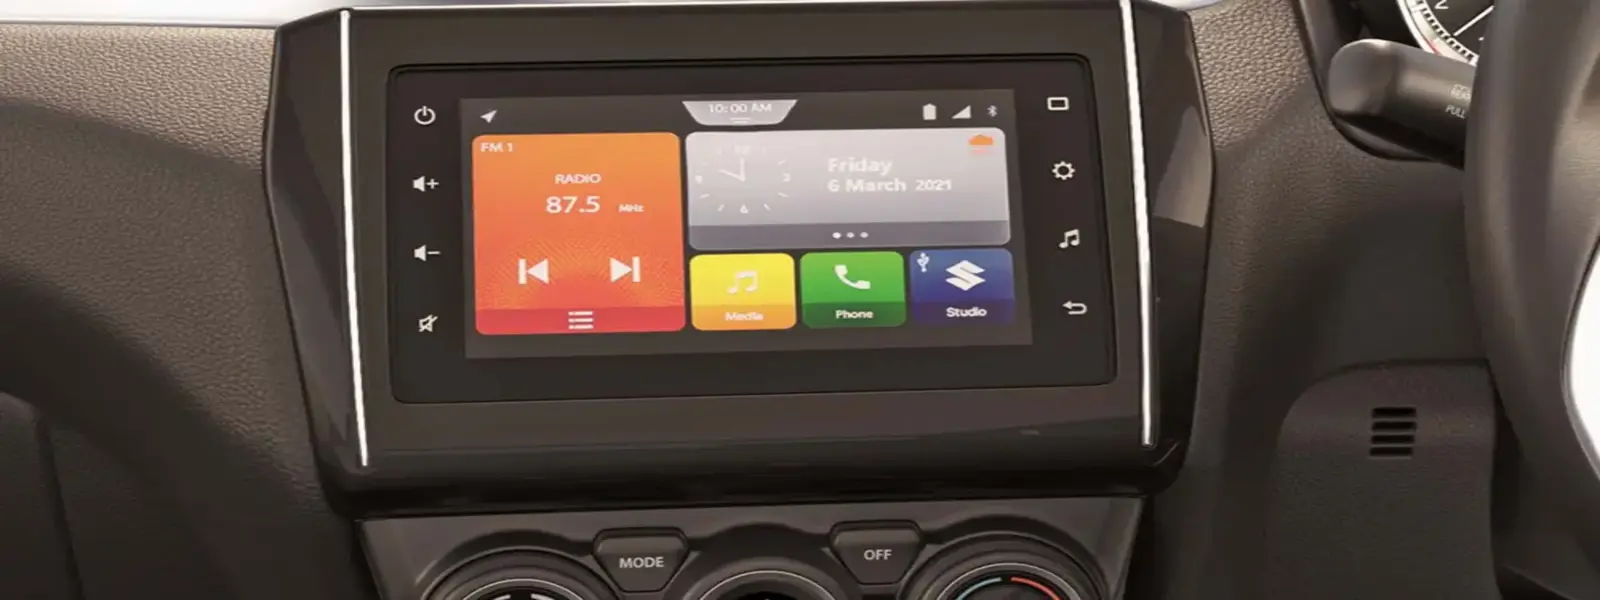 Swift- SmartPlay Infotainment System Auric Motors RICOO Phase 2, Jhunjhunu